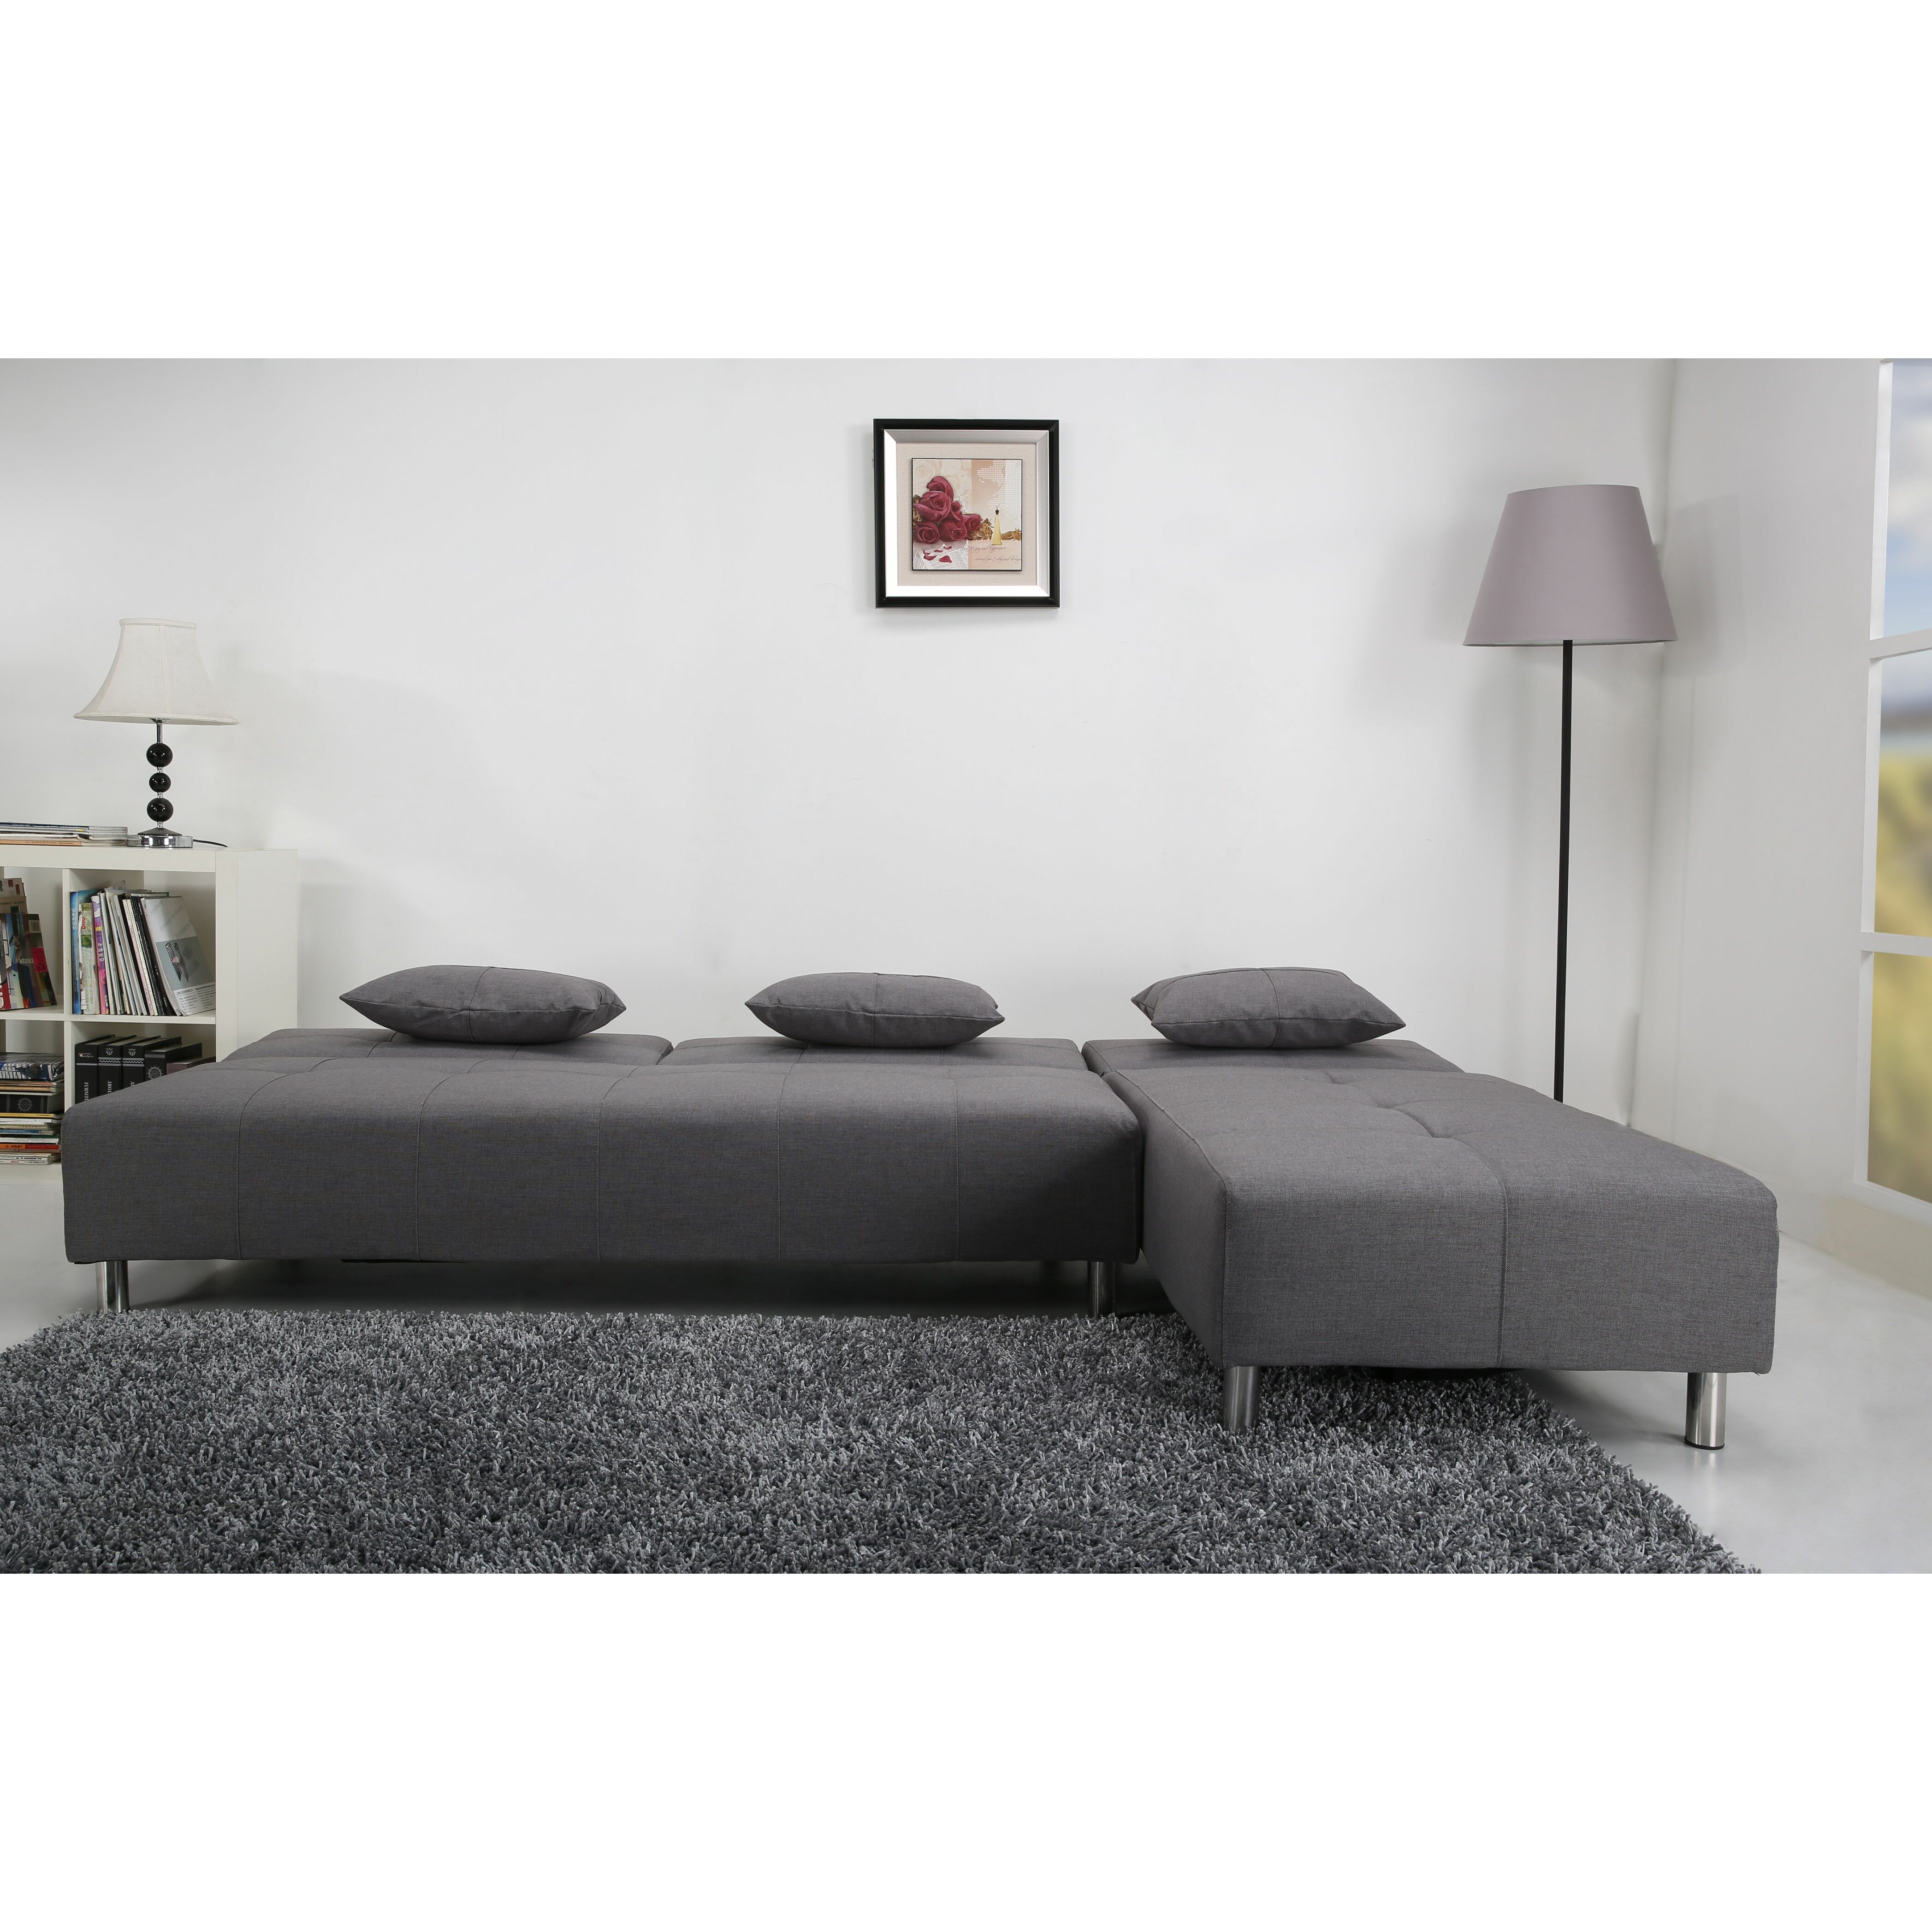 Leader Lifestyle Maison Modular Corner Sofa Bed And Reviews Uk